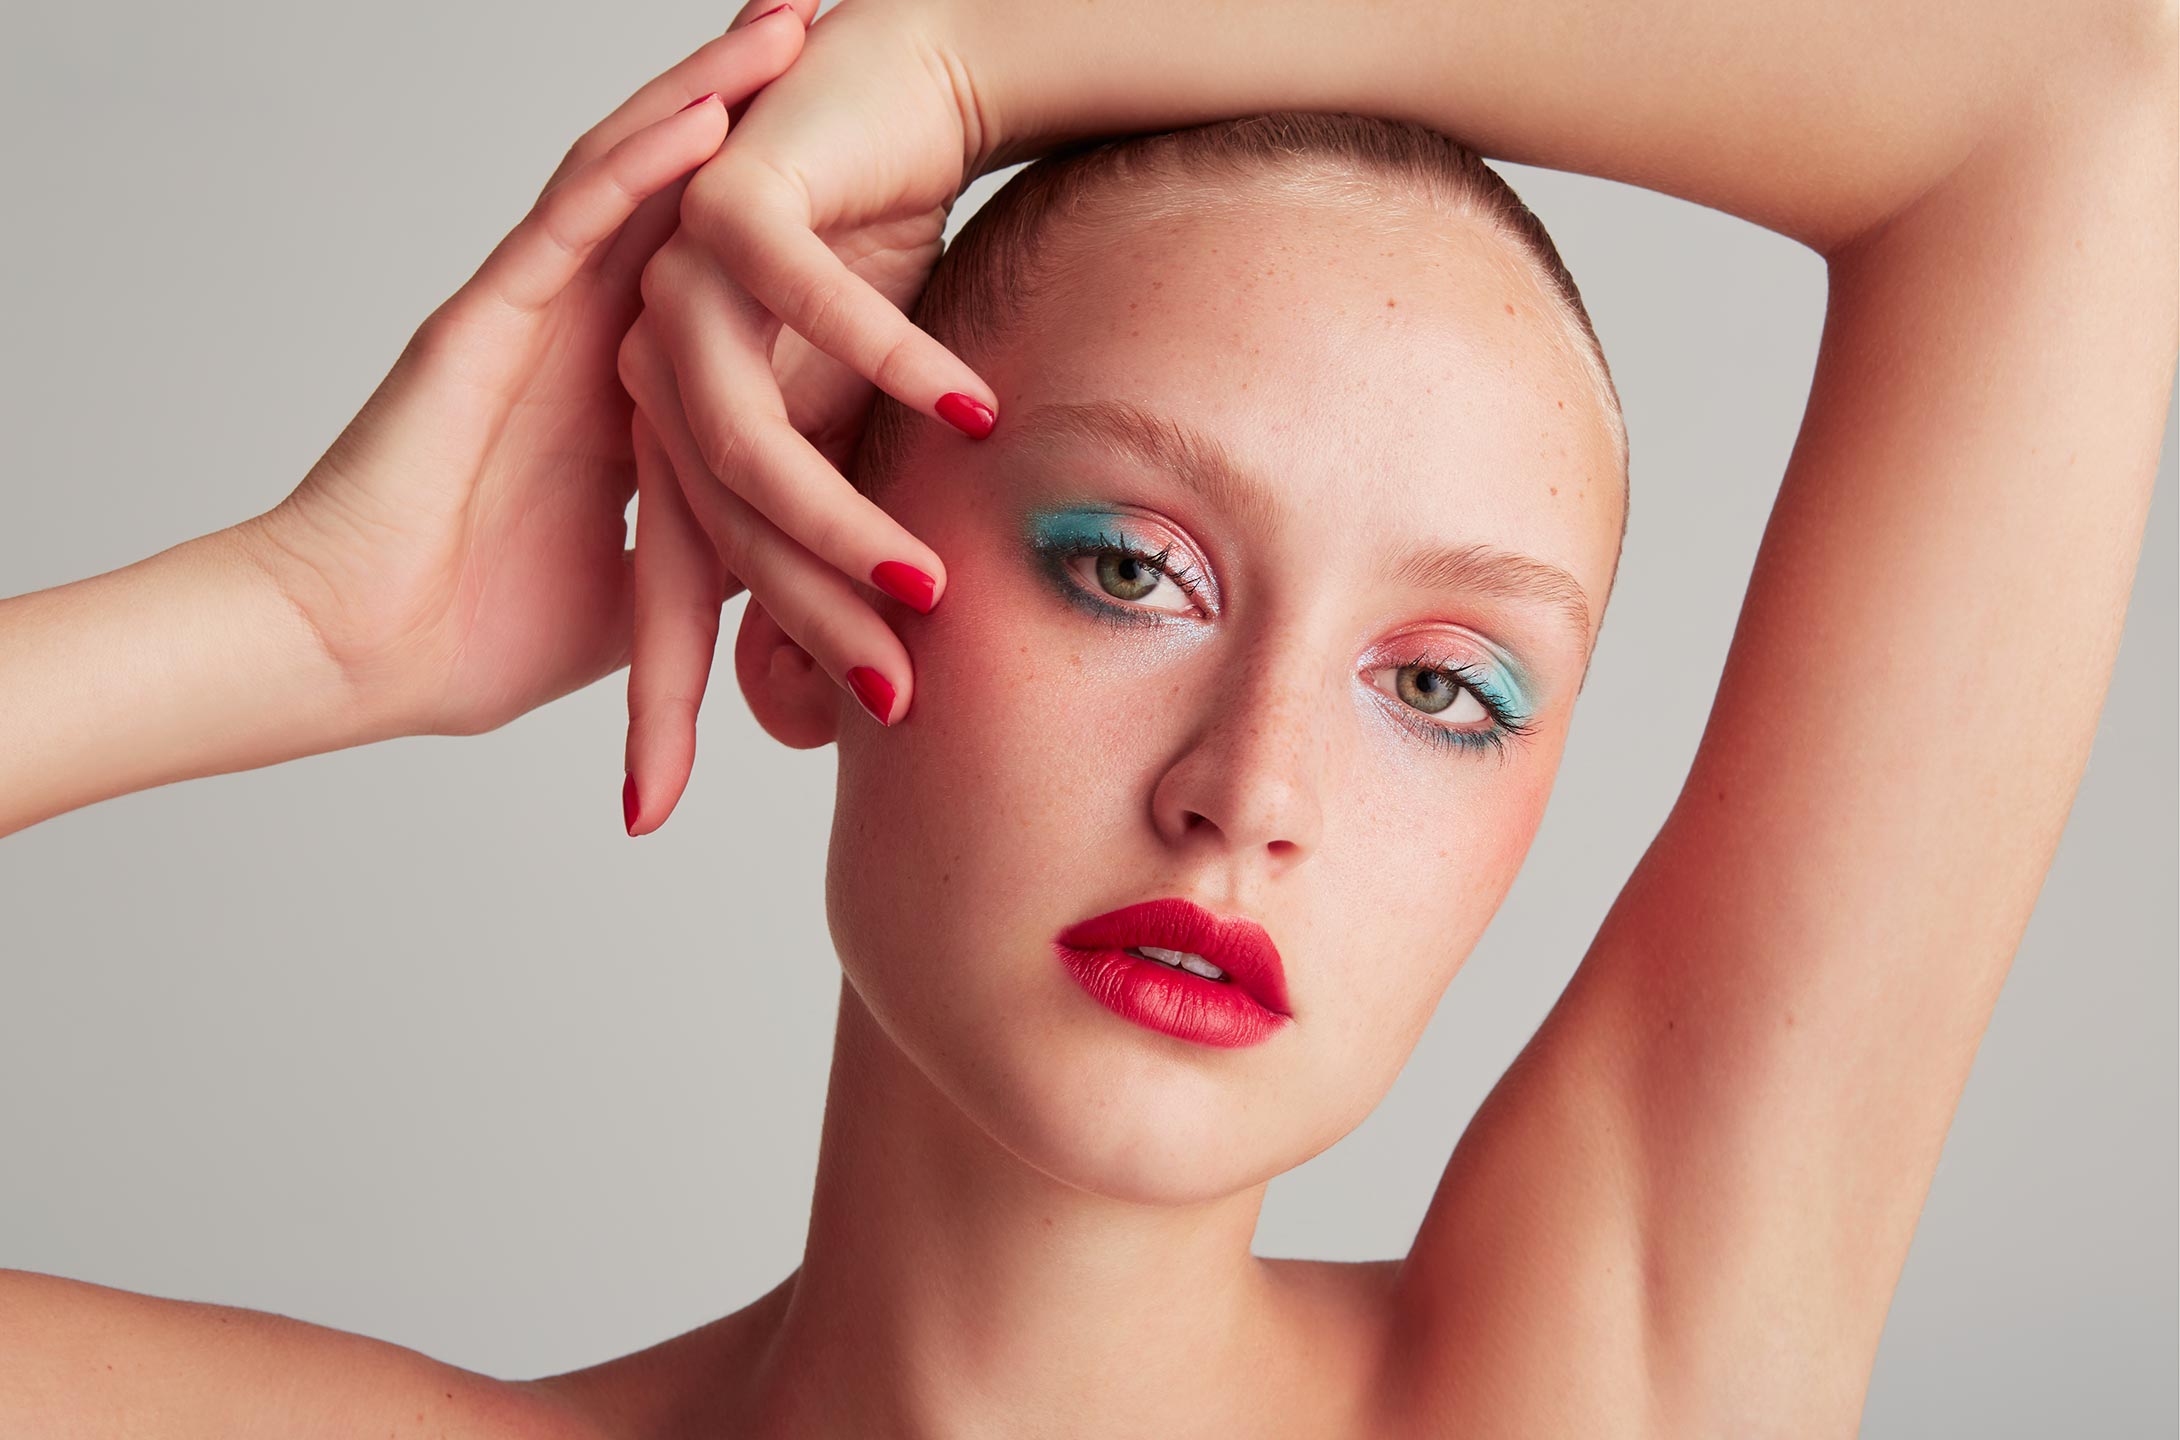 Beauty Photography - Model Nicole Shecter I Greg Sorensen I Fashion & Beauty Photographer I NYC